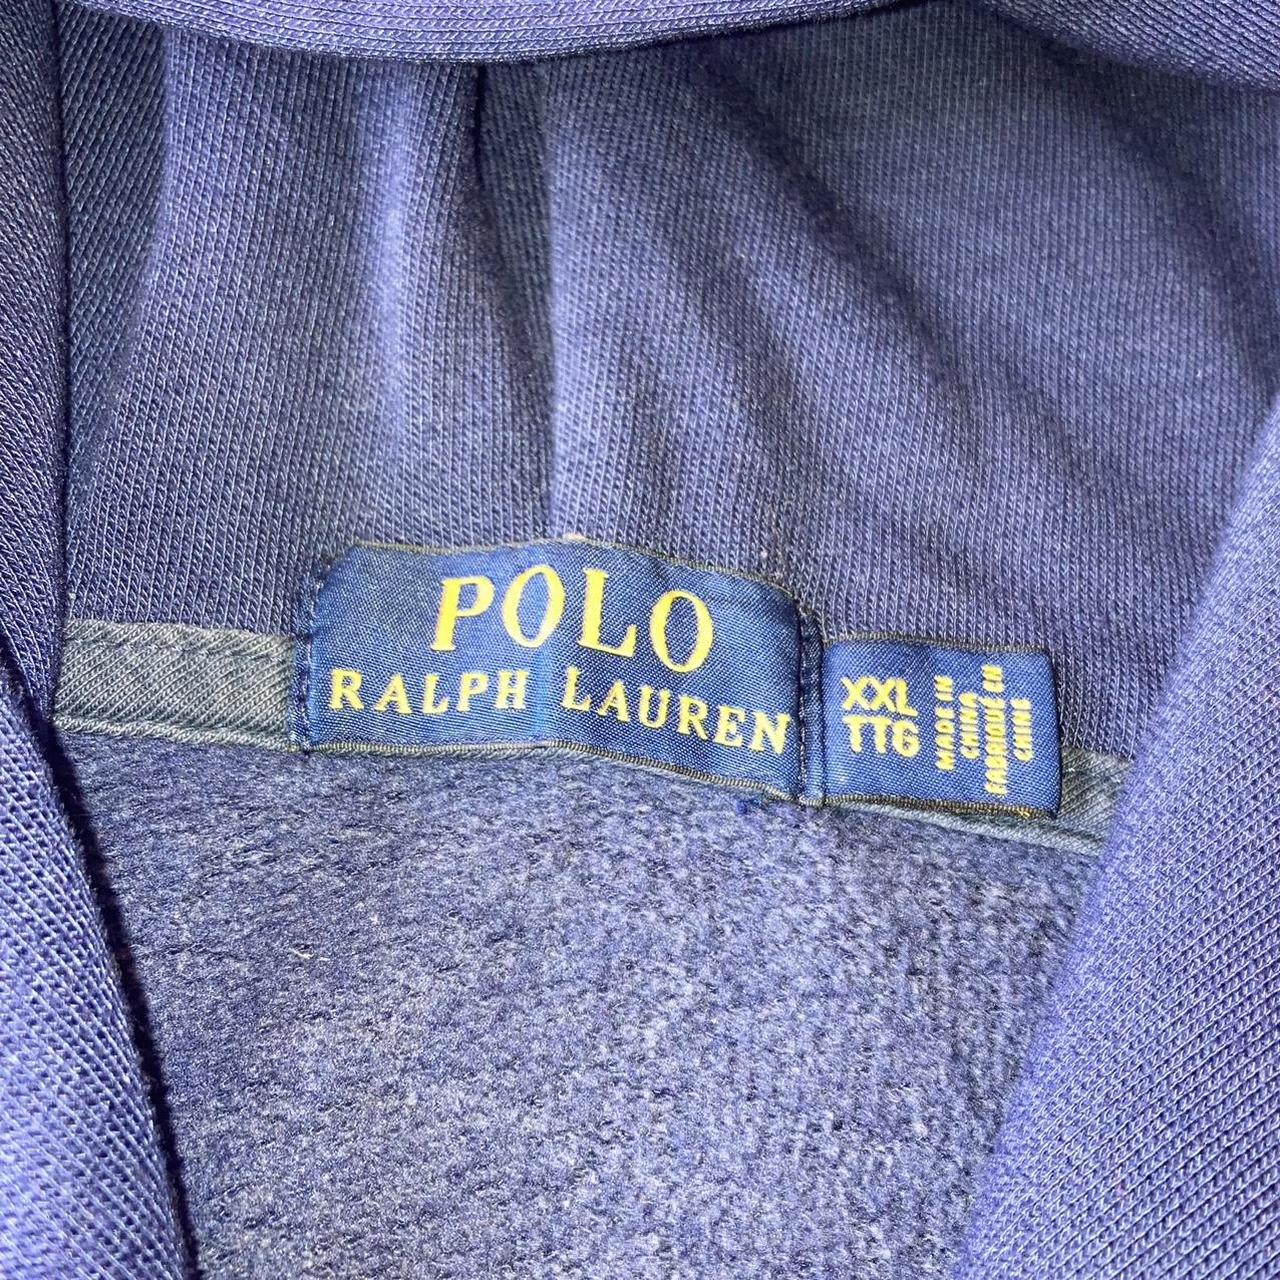 Polo Ralph Lauren Men's Blue and White Hoodie | Depop